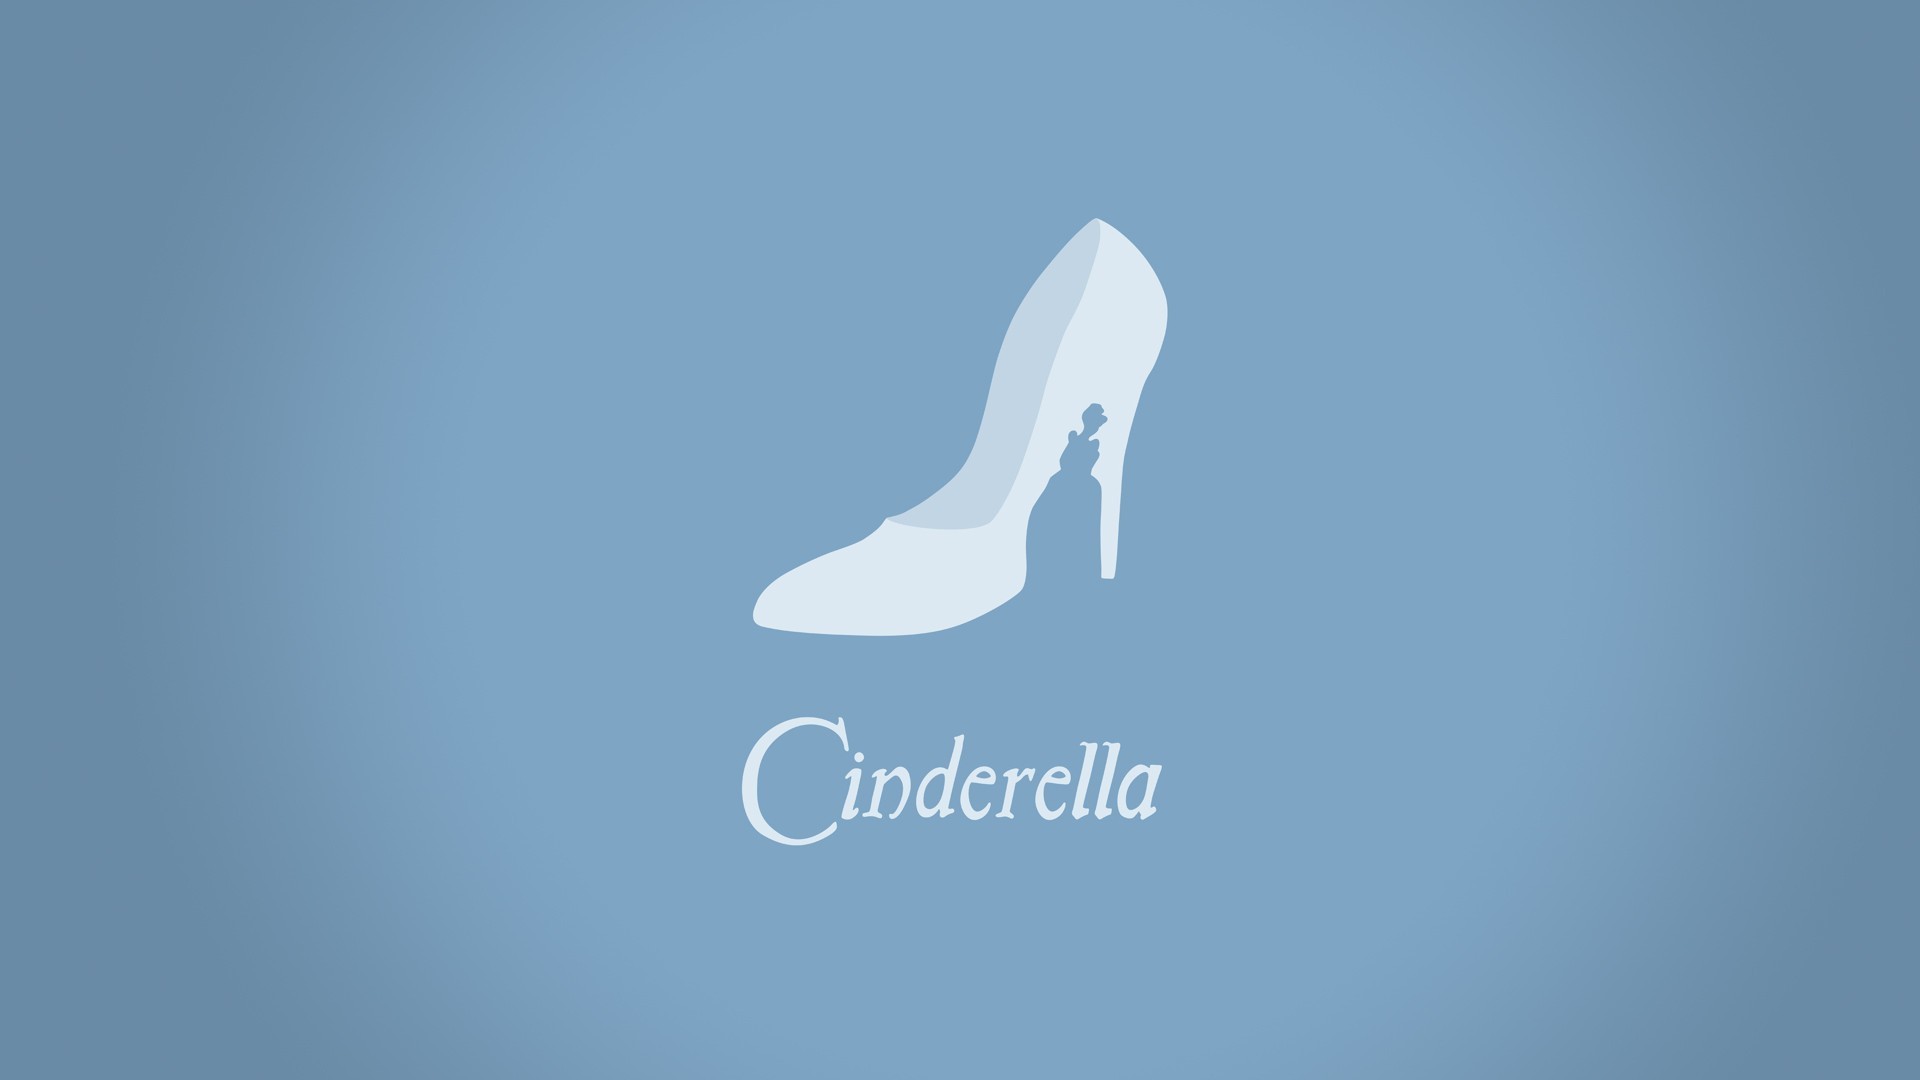 1920x1080 Minimalistic Cinderella hd wallpaper background